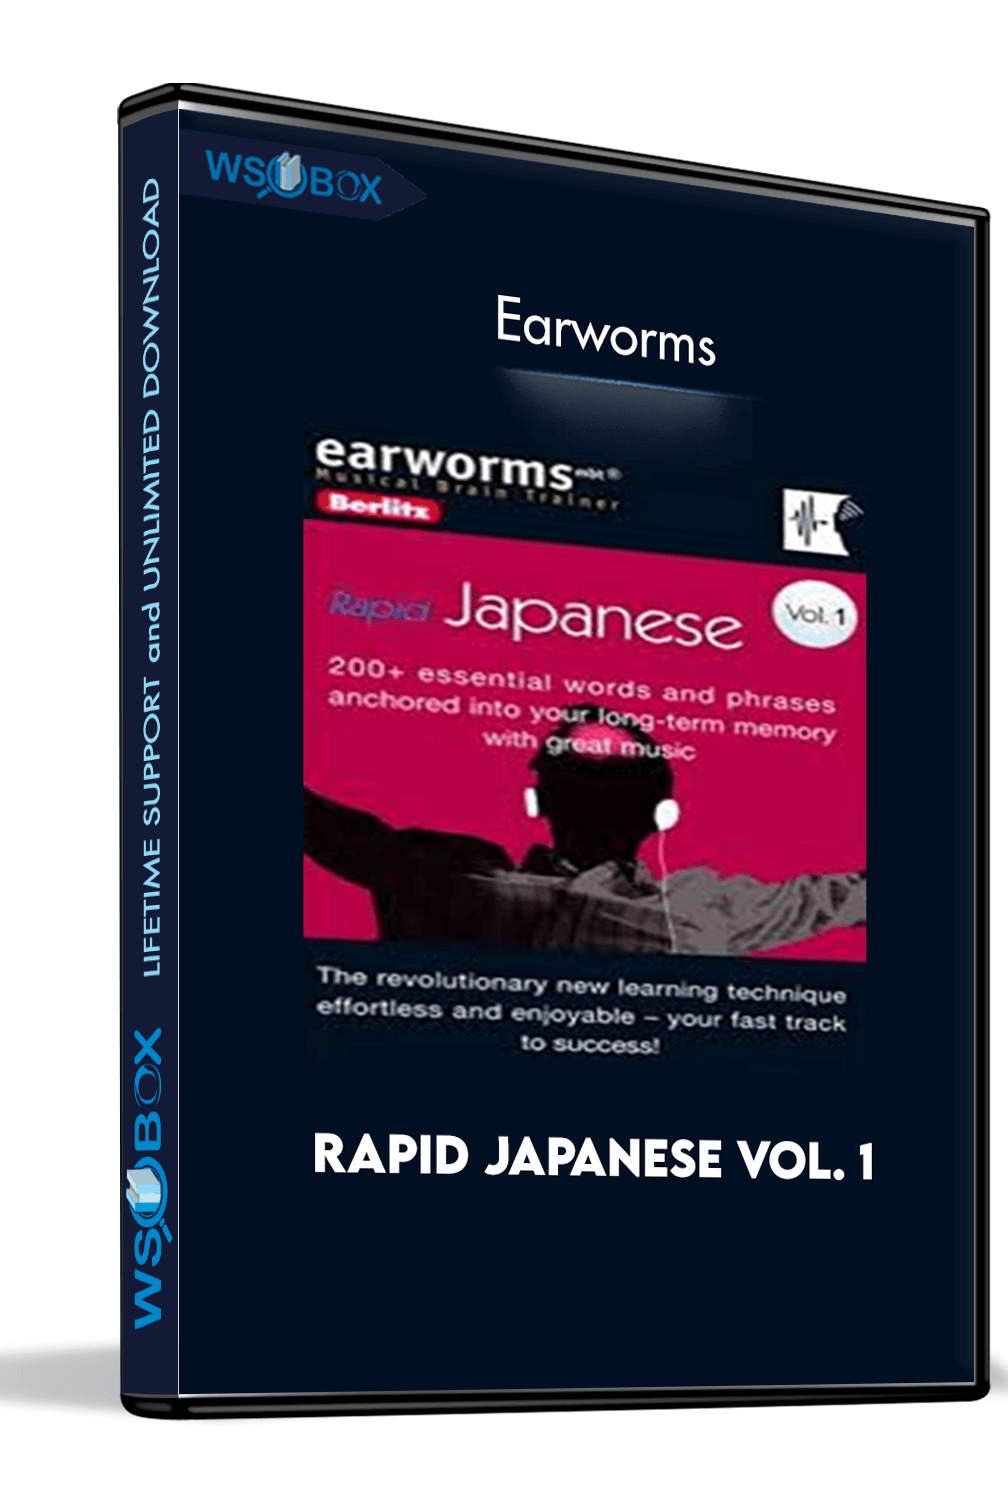 Rapid Japanese Vol. 1 – Earworms